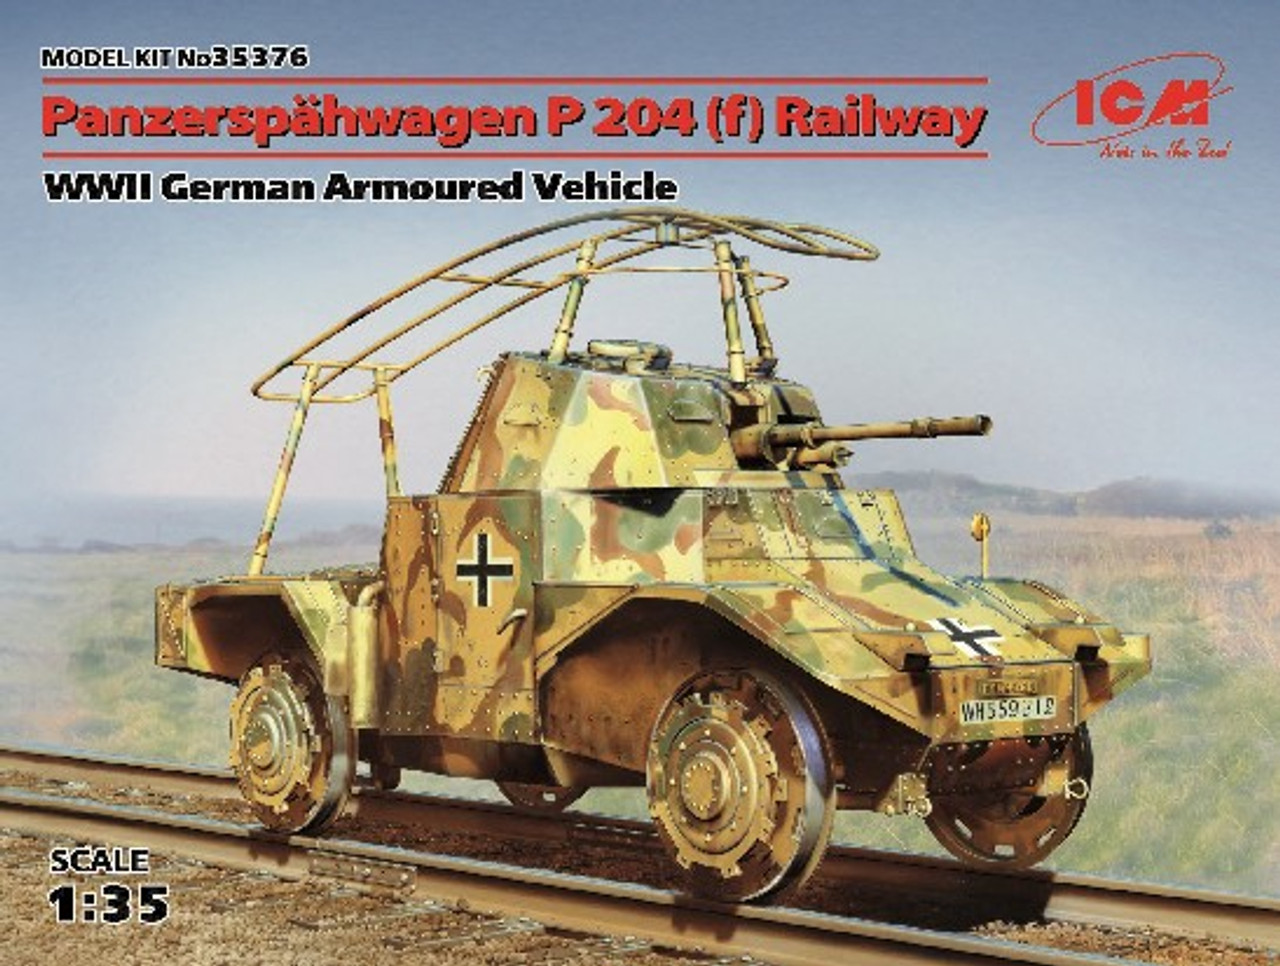 Model Kit 32413 Tamiya 1/35 Military Series No.13 German Army Railway P204 f